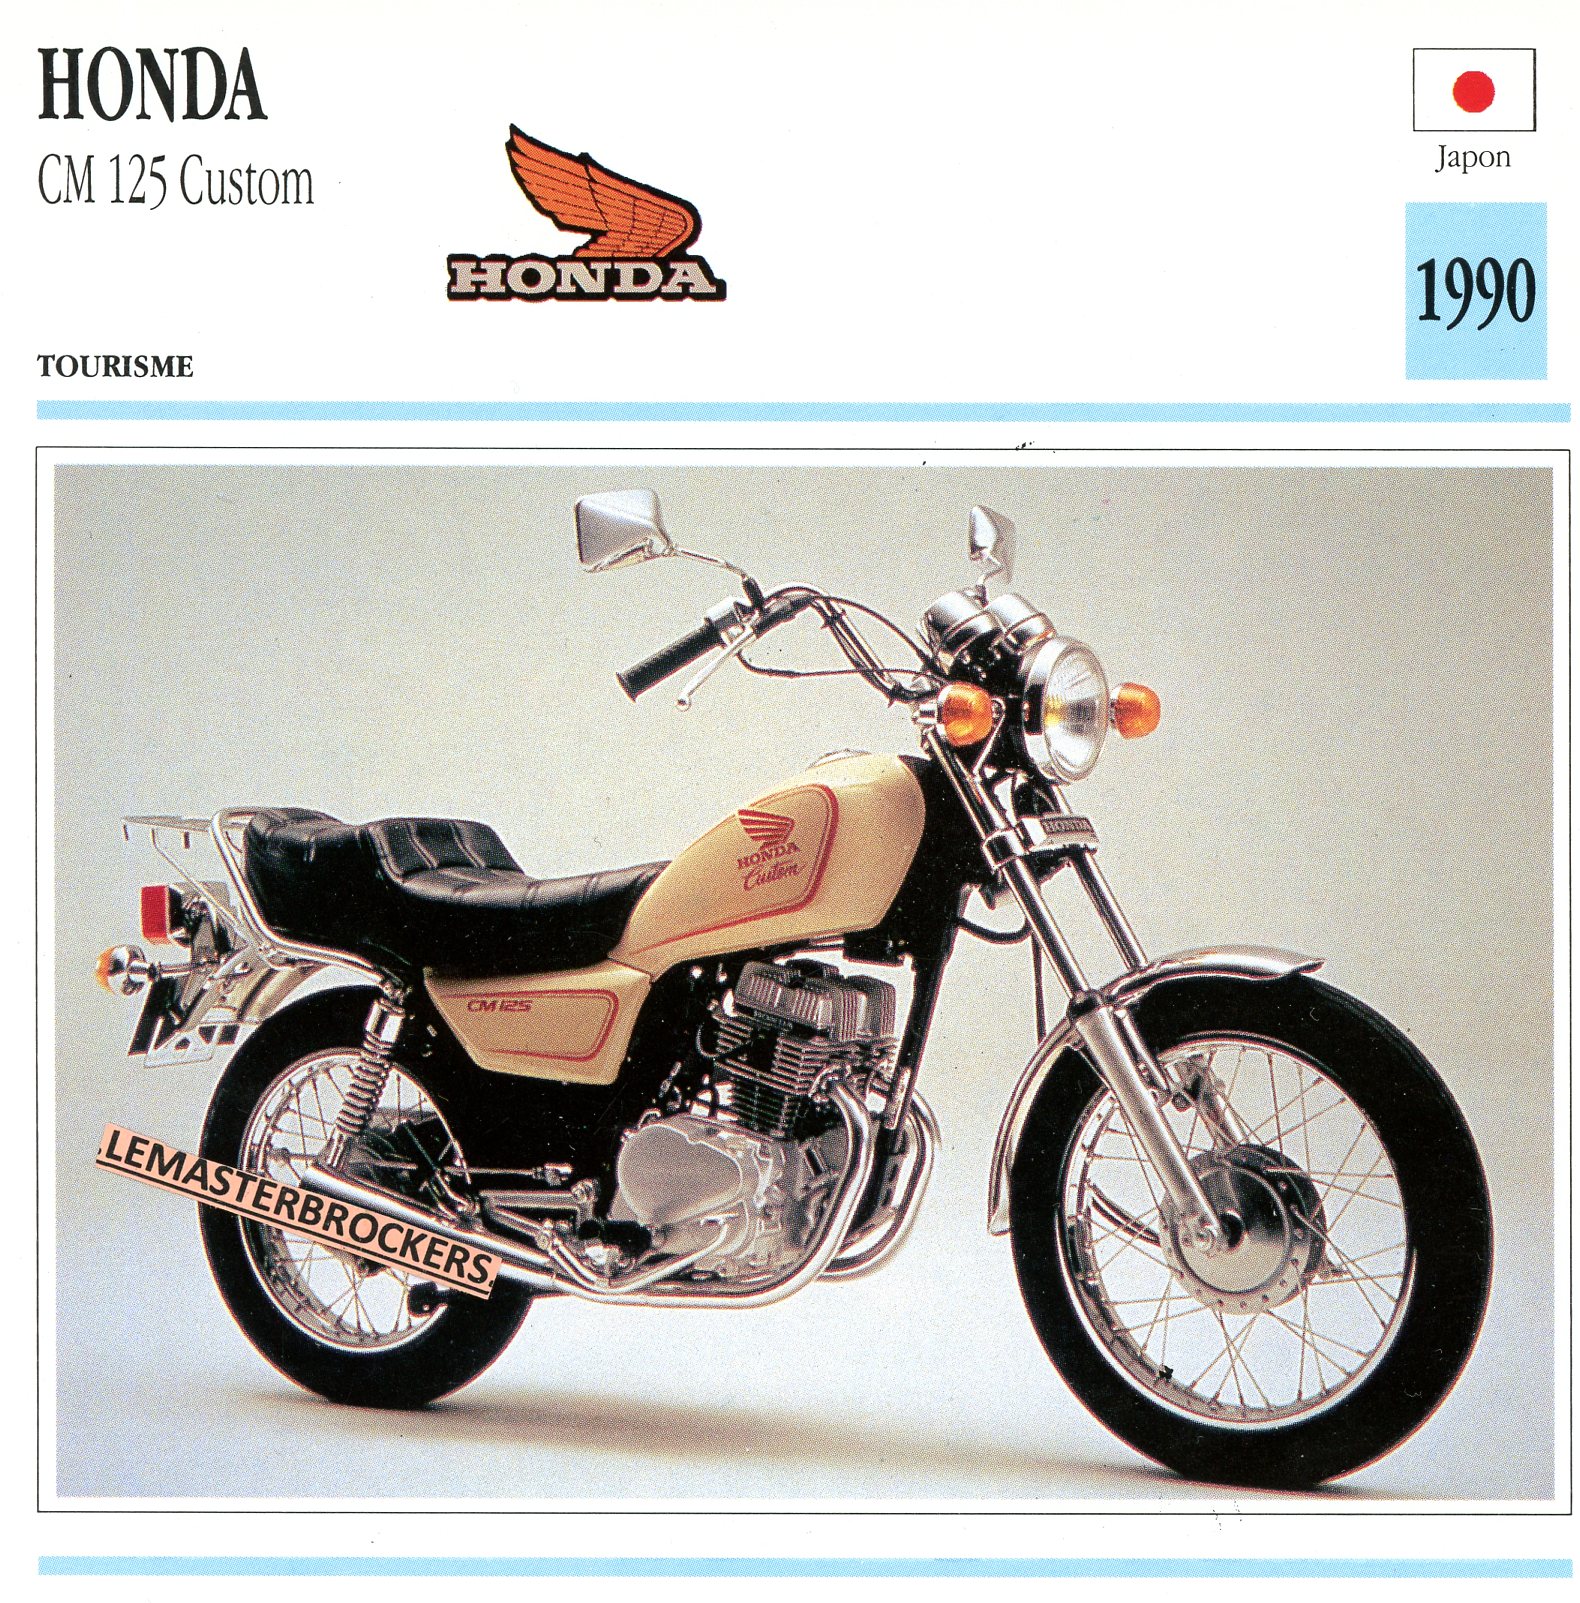 FICHE-MOTO-HONDA-CM-125-CM125-LEMASTERBROCKERS-CARS-MOTORCYCLE